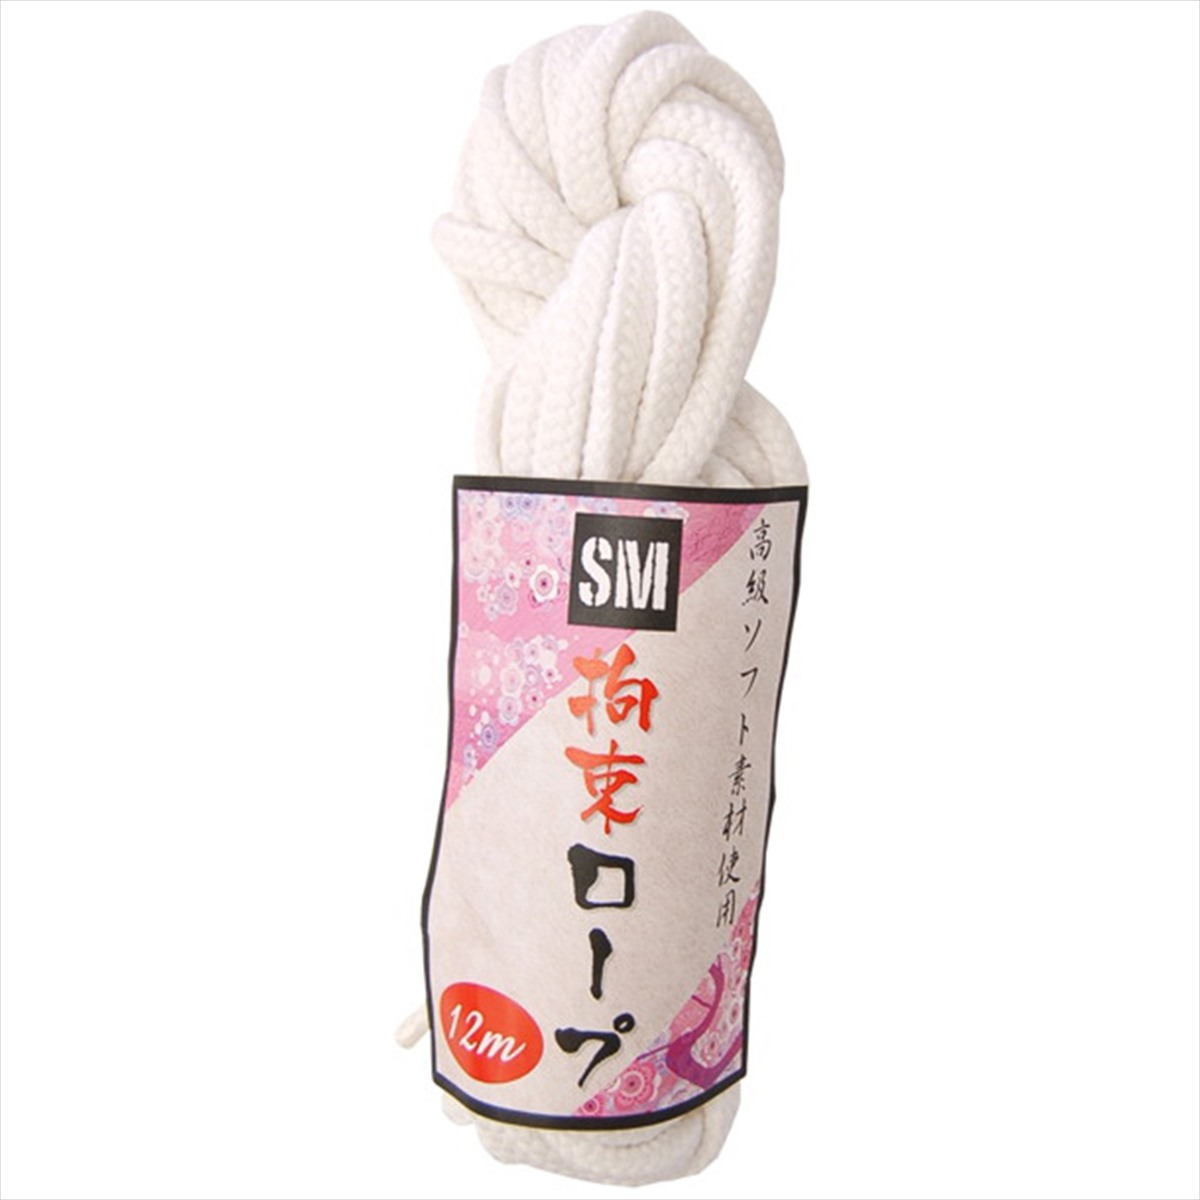 SM拘束ロープ(12m)白